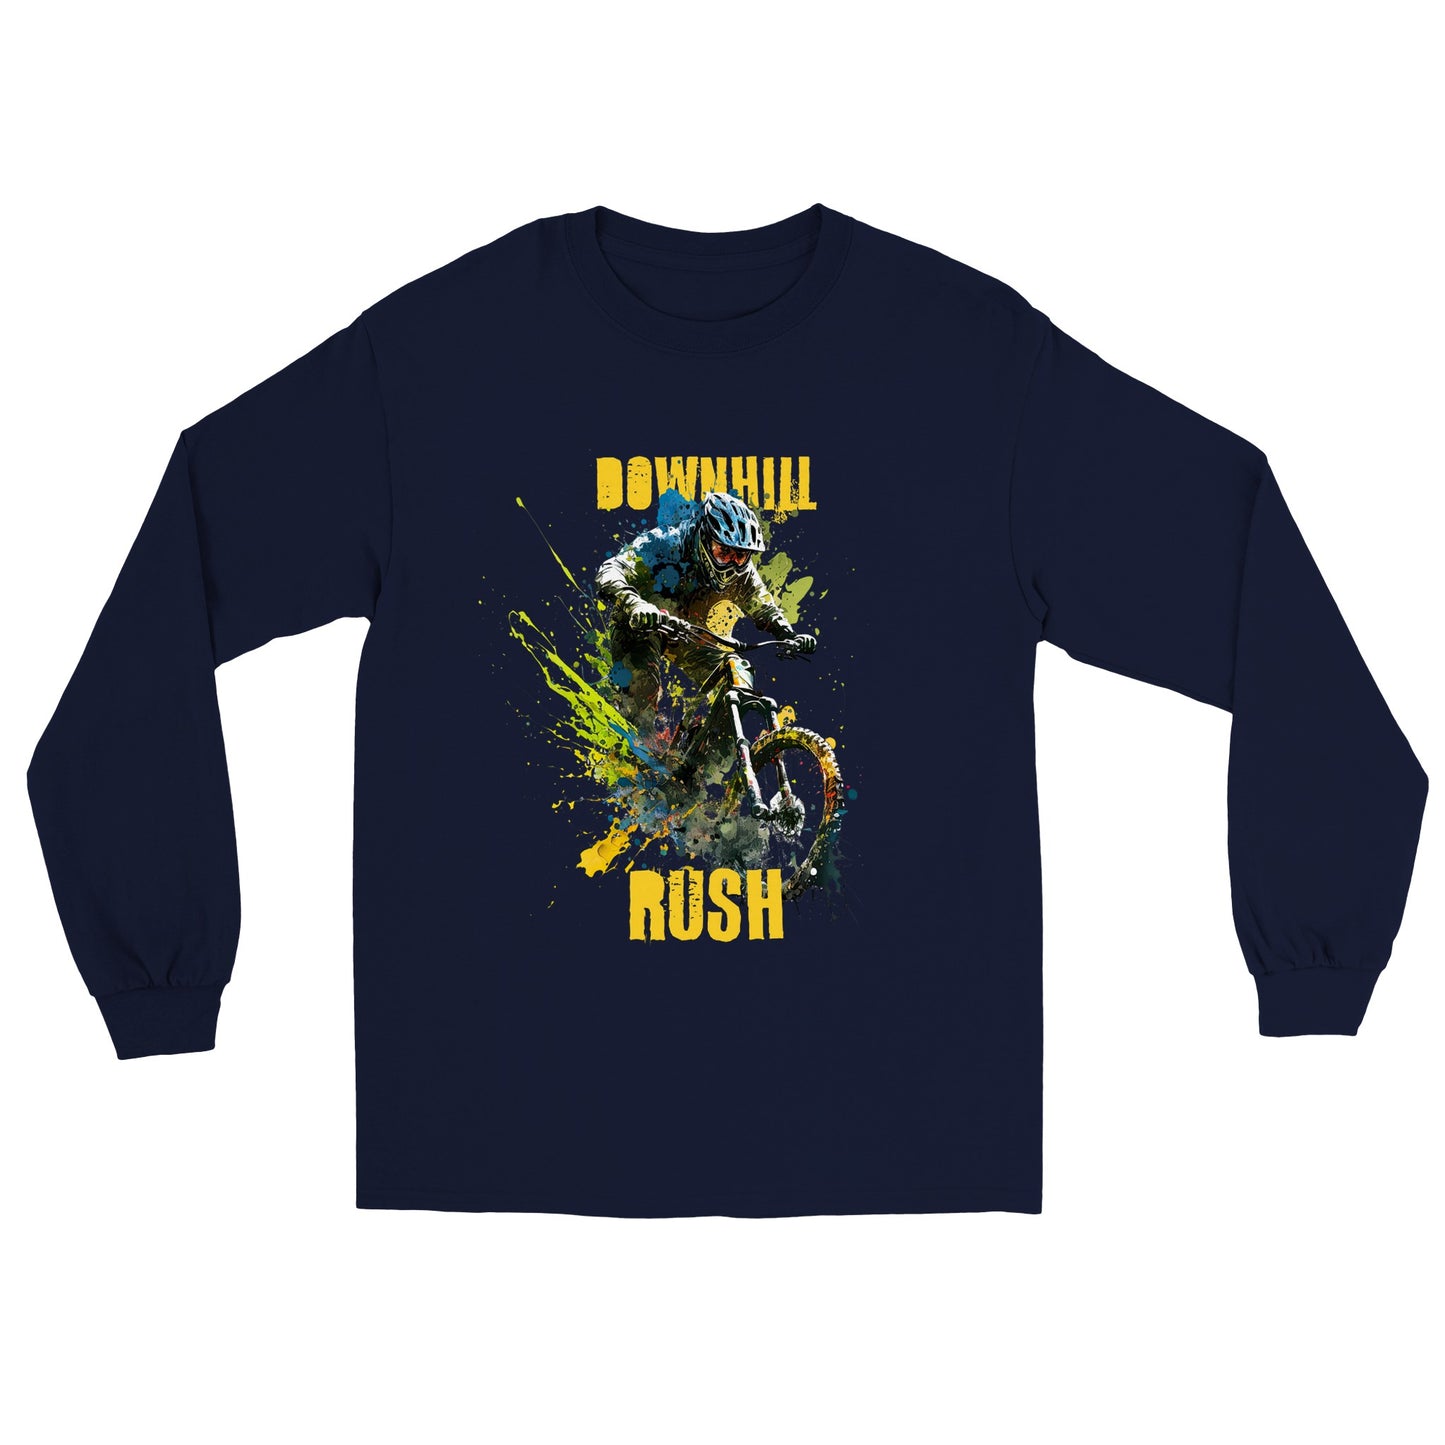 Navy Blue long sleeve t-shirt with Downhill Rush Mountain bike graphic